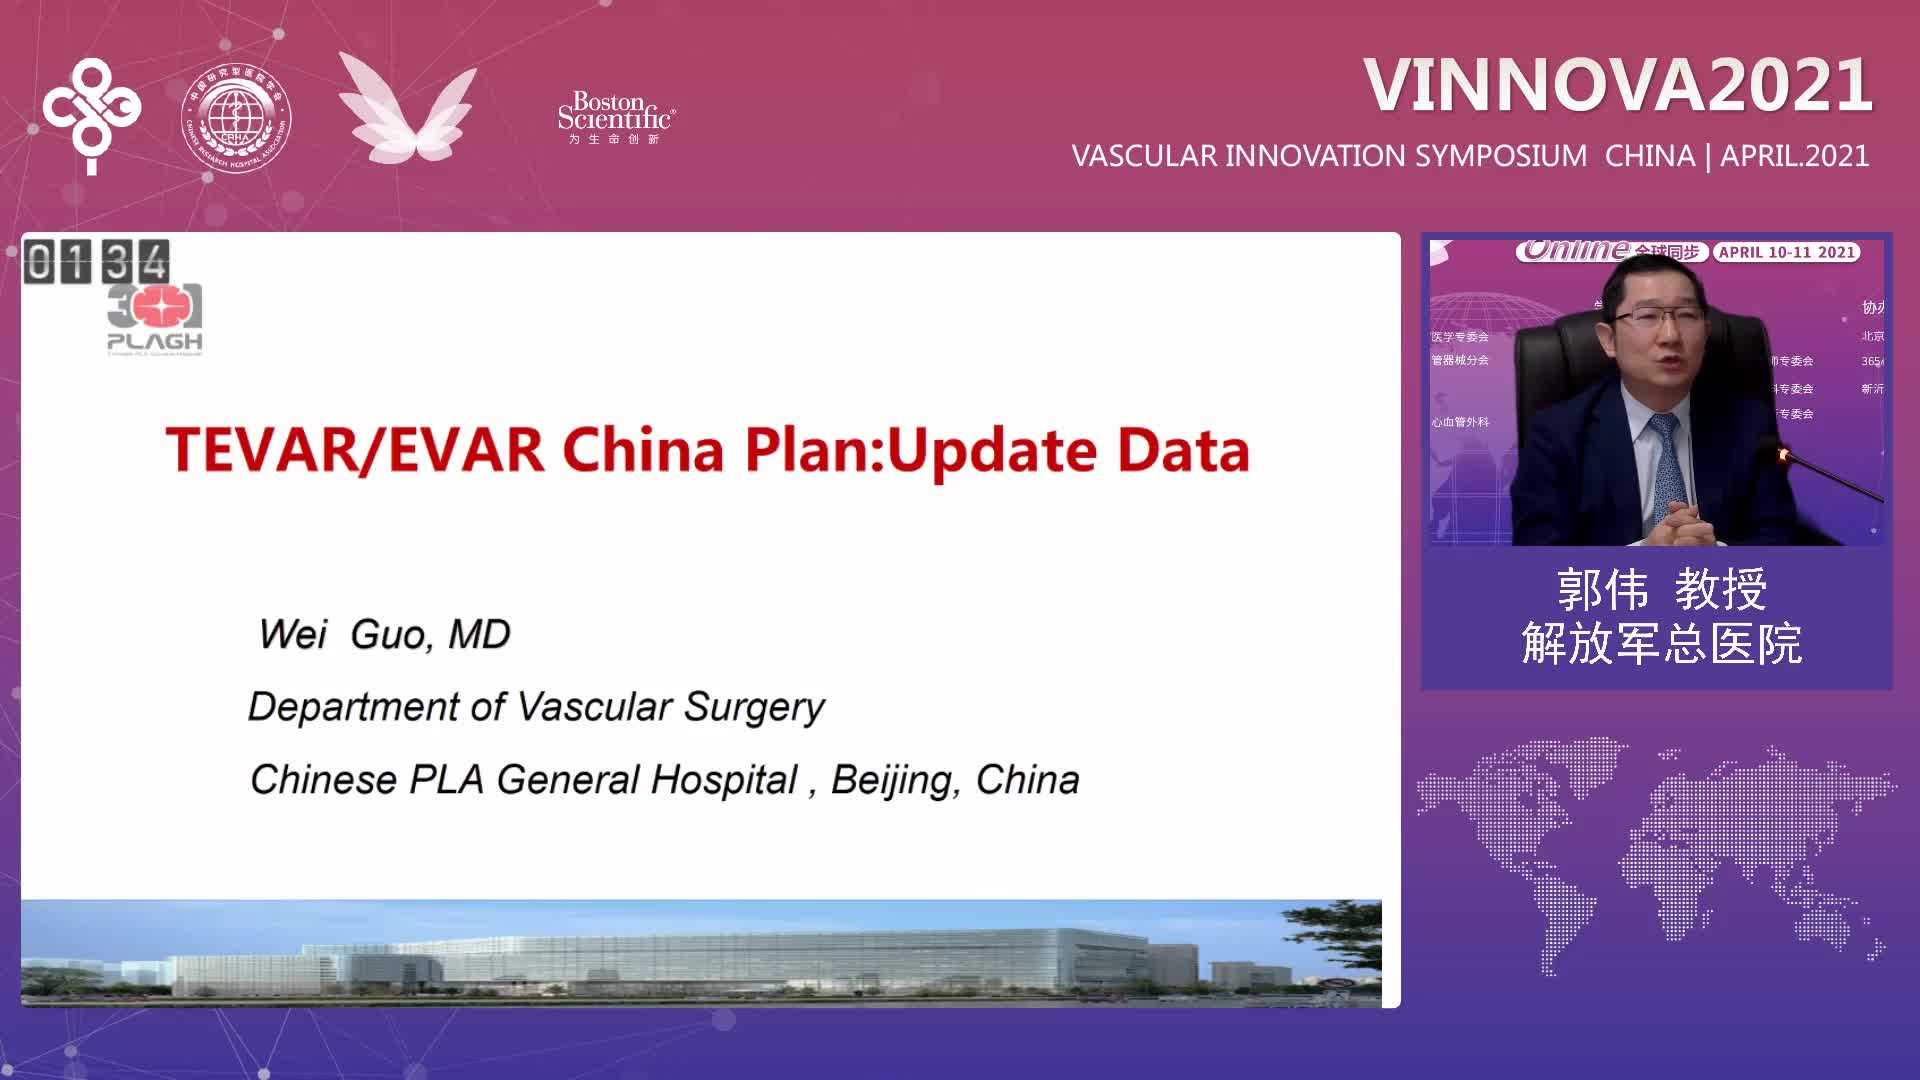 郭伟--TEVARE/VAR China Plan：Update Date